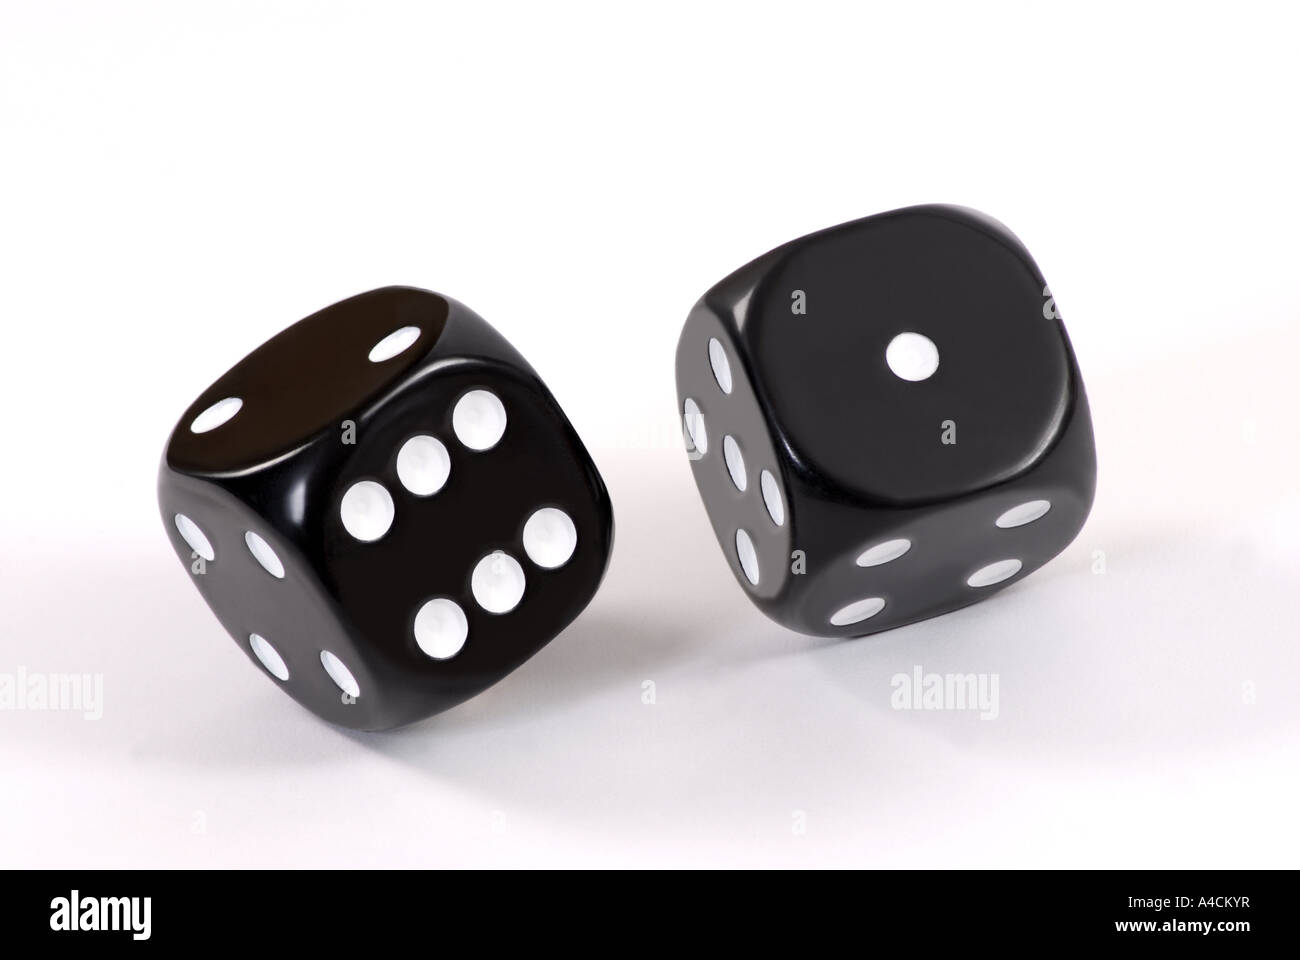 Pair of black dice Stock Photo